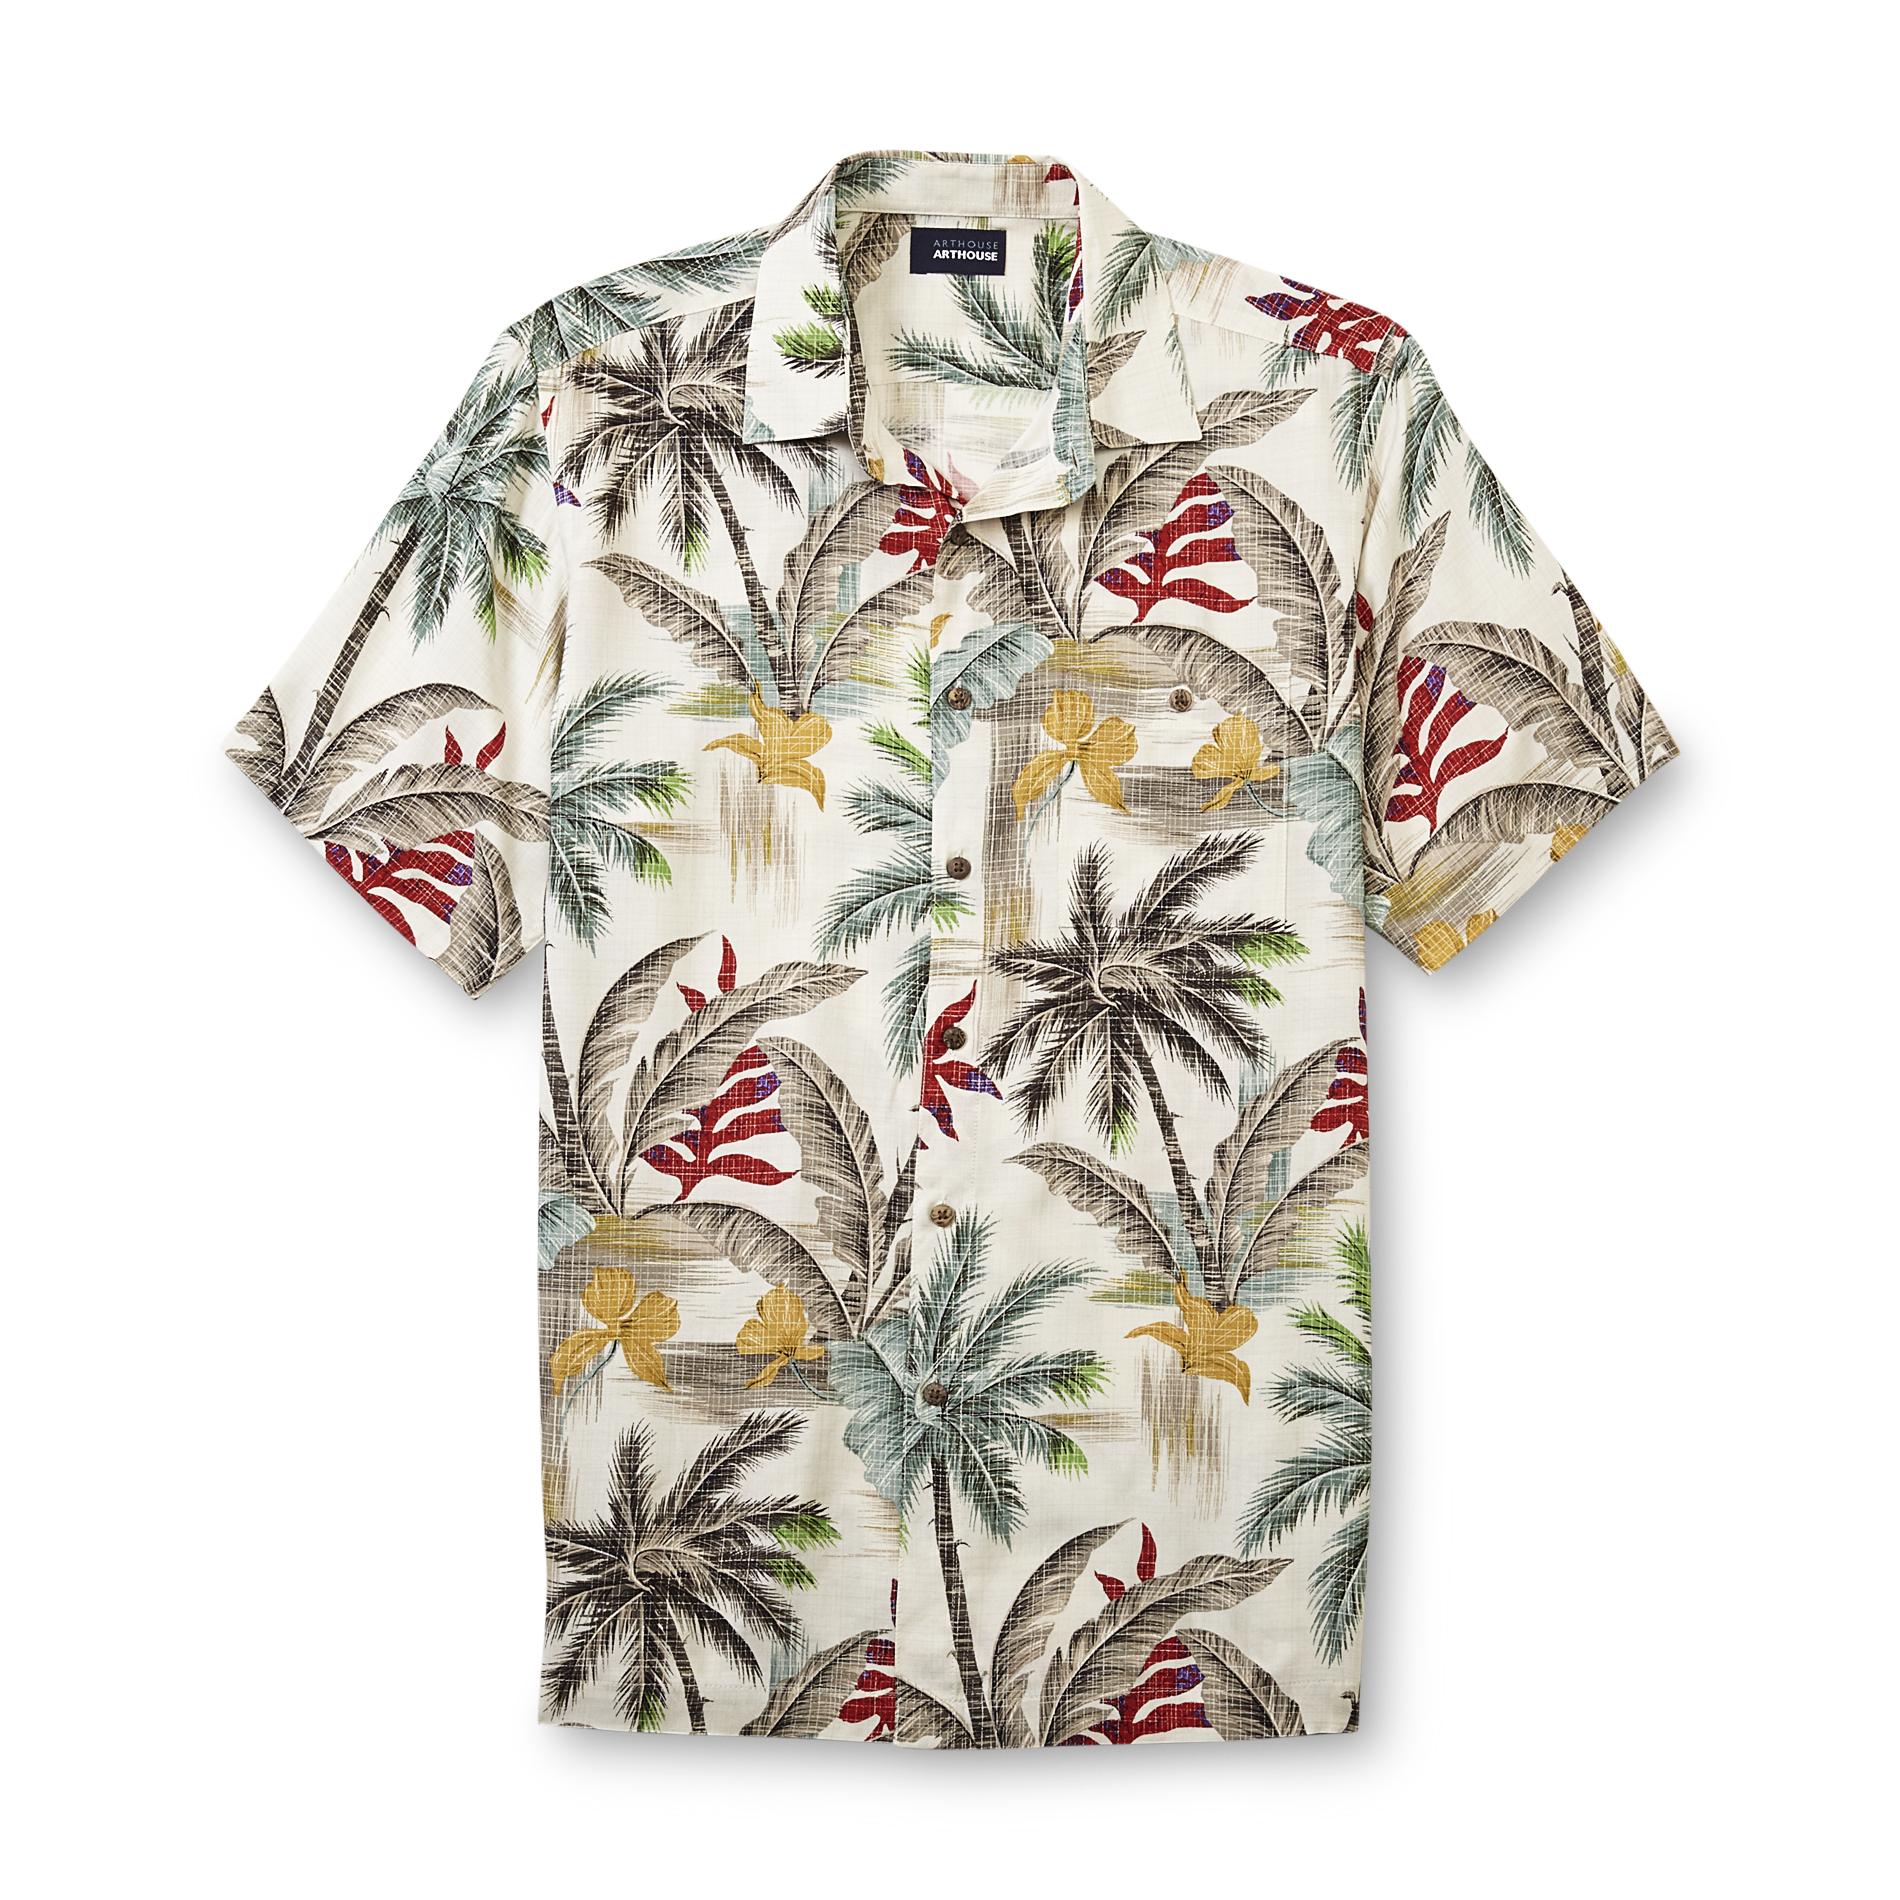 Basic Editions Men's Camp Shirt - Floral